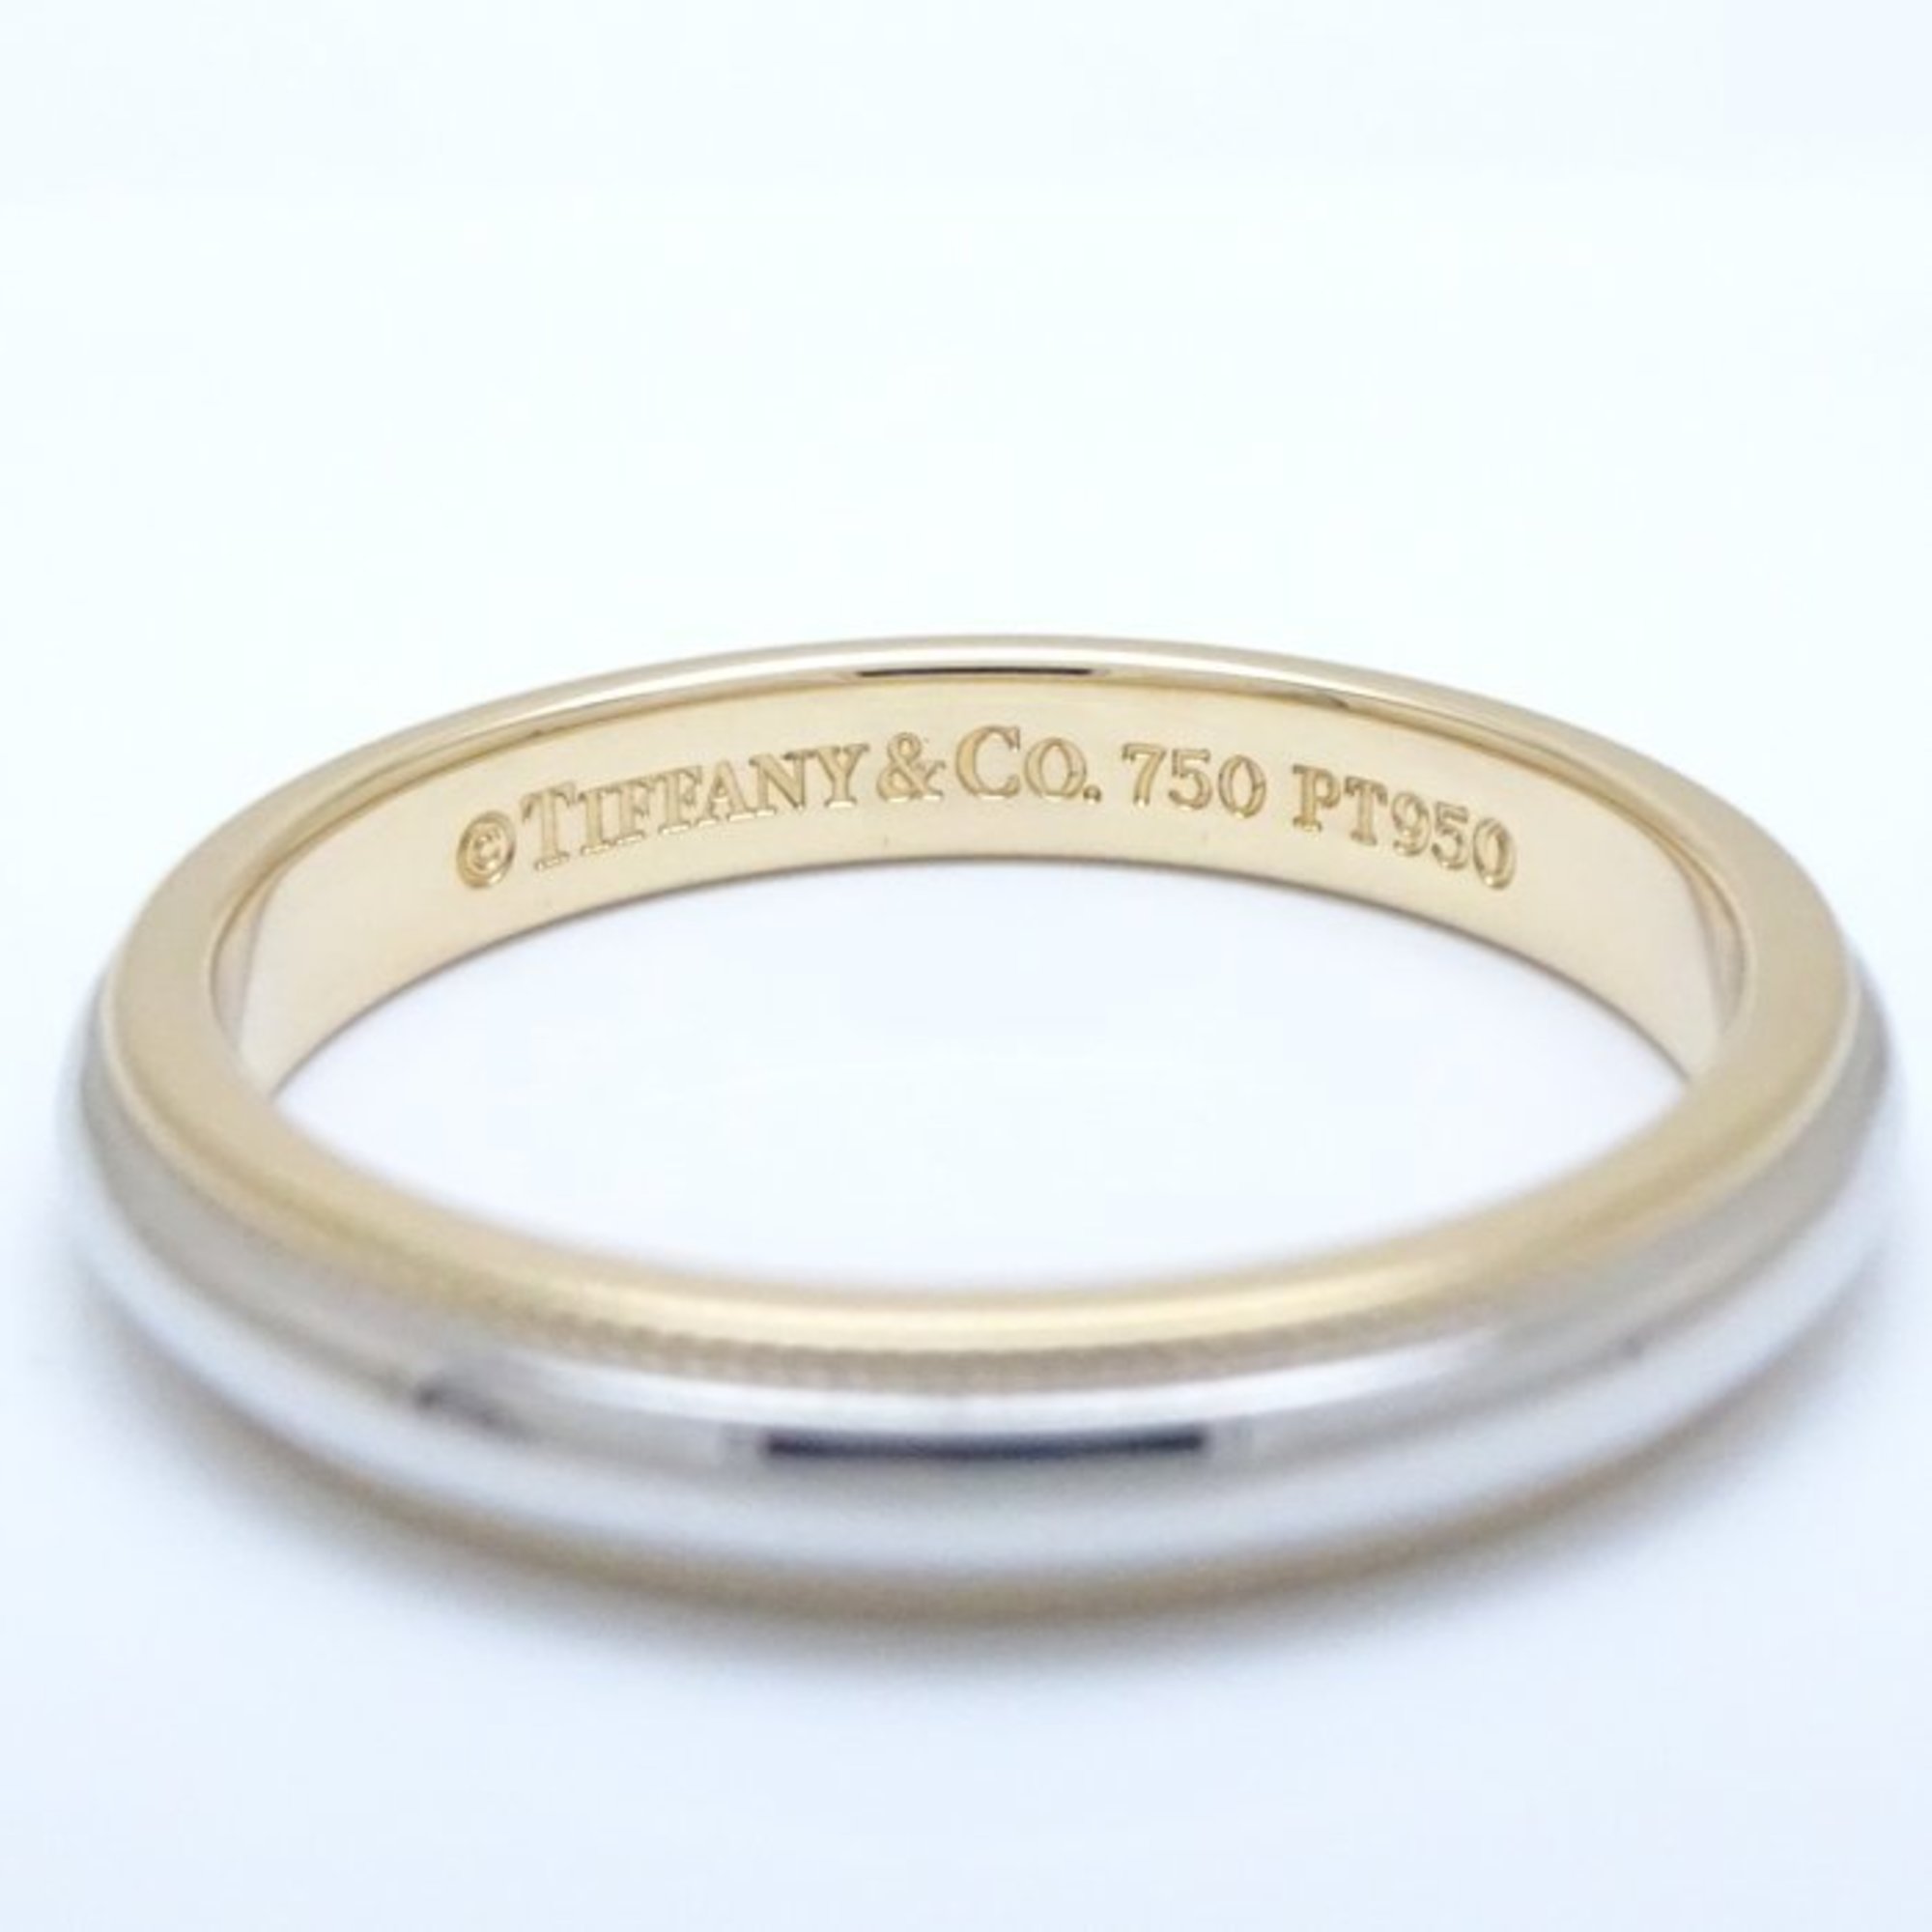 TIFFANY&Co. Tiffany Milgrain Ring, Combination Color, K18YG Yellow Gold x Pt950 Platinum, 291614